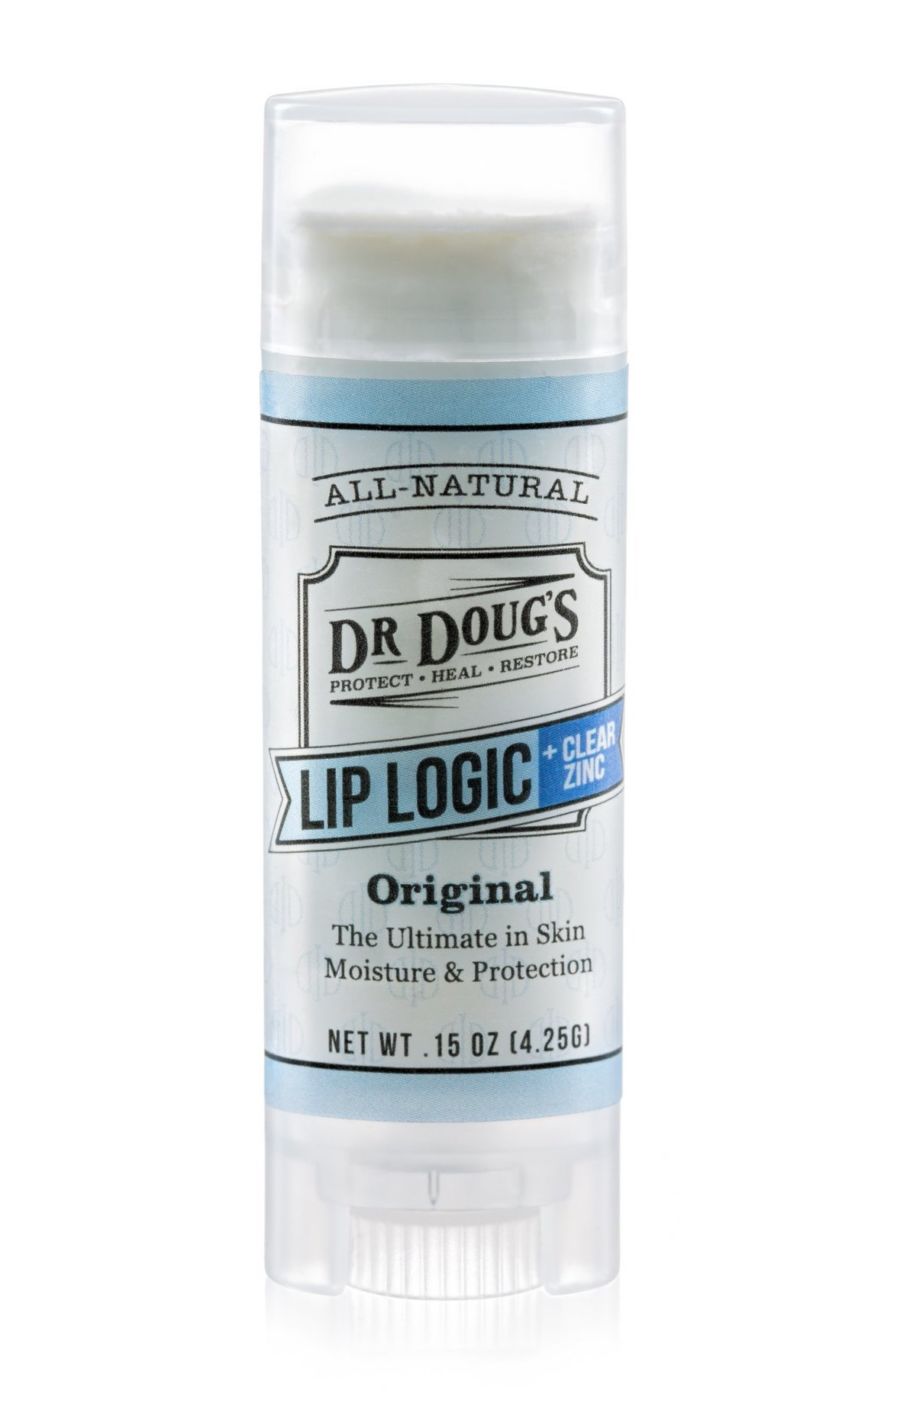 Dr. Doug's Lip Logic Zinc